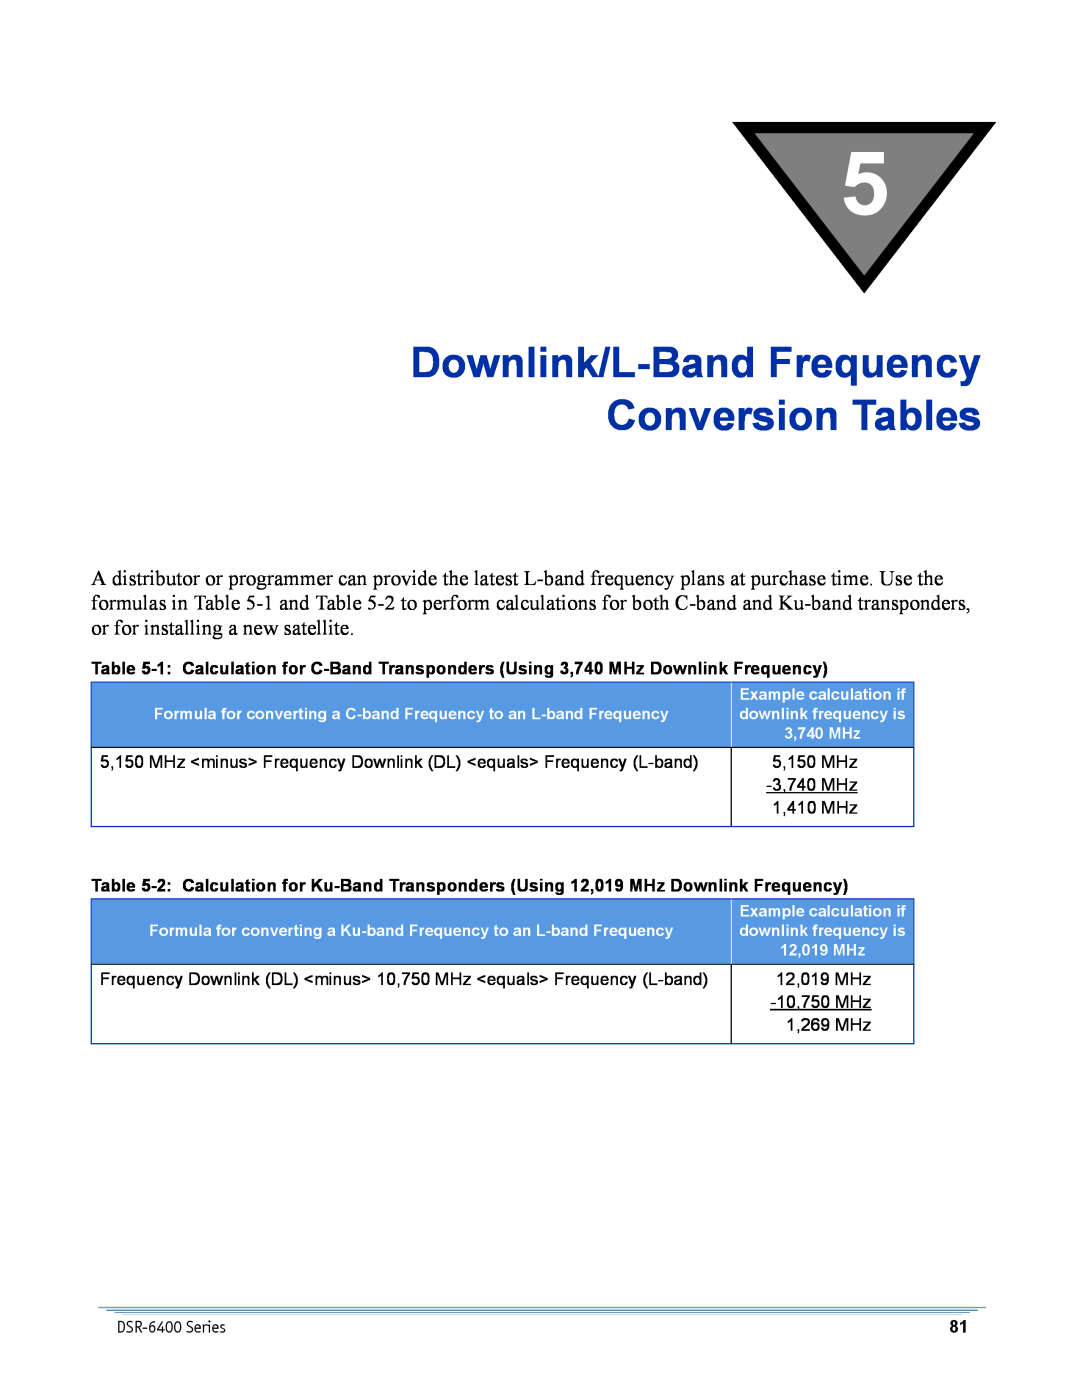 Motorola DSR-6400 manual Downlink/L-BandFrequency Conversion Tables 